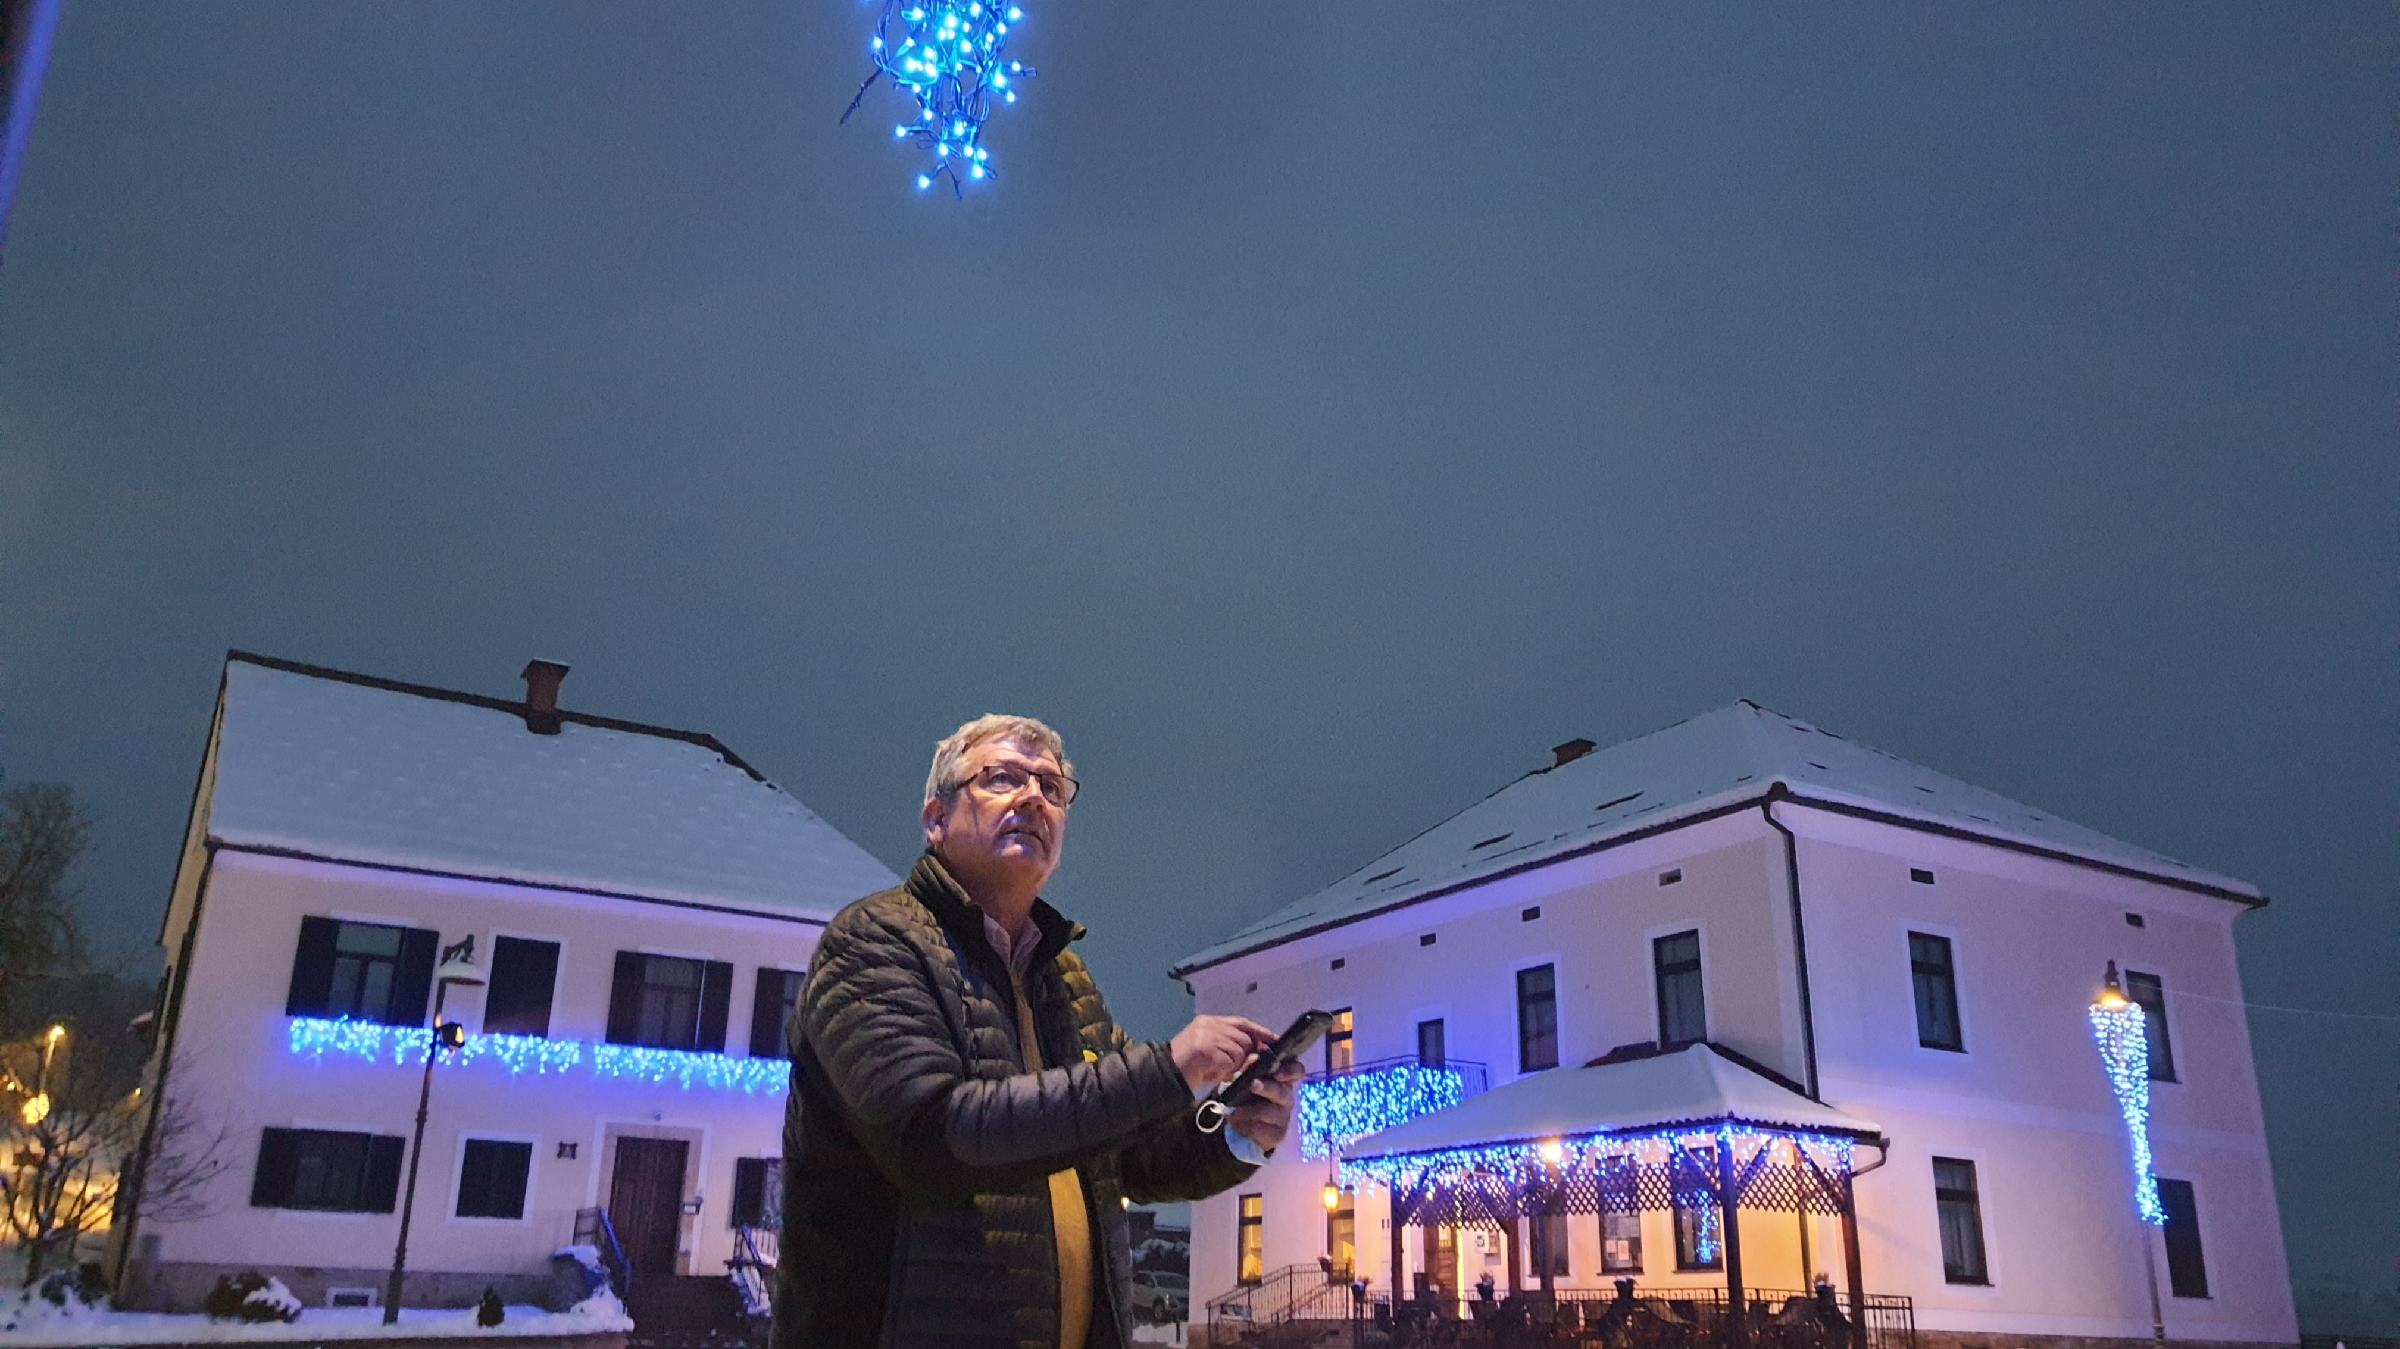 FOTO: Jurovski župan na osredjem trgu prižgal novoletne lučke